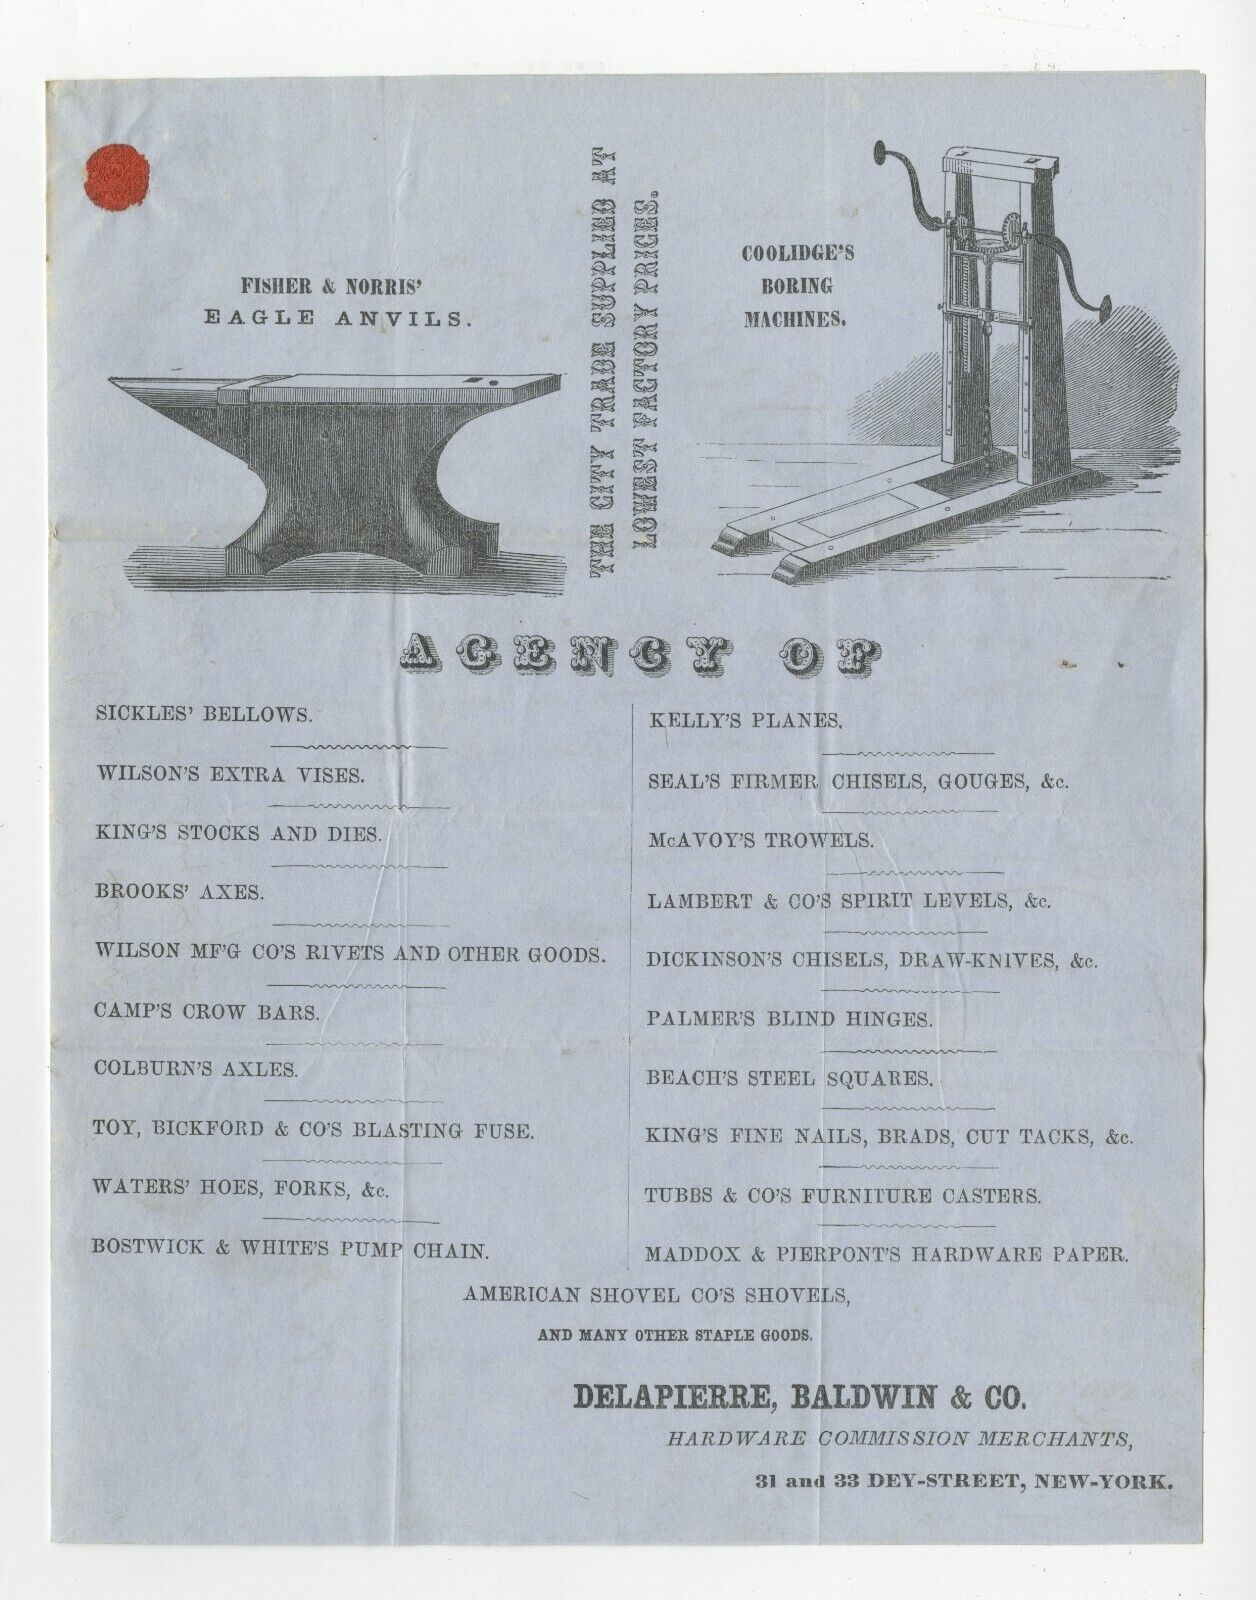 1855 NYC Fisher & Norris Eagle Anvil Anvils & Beam Boring Machine Advertisement